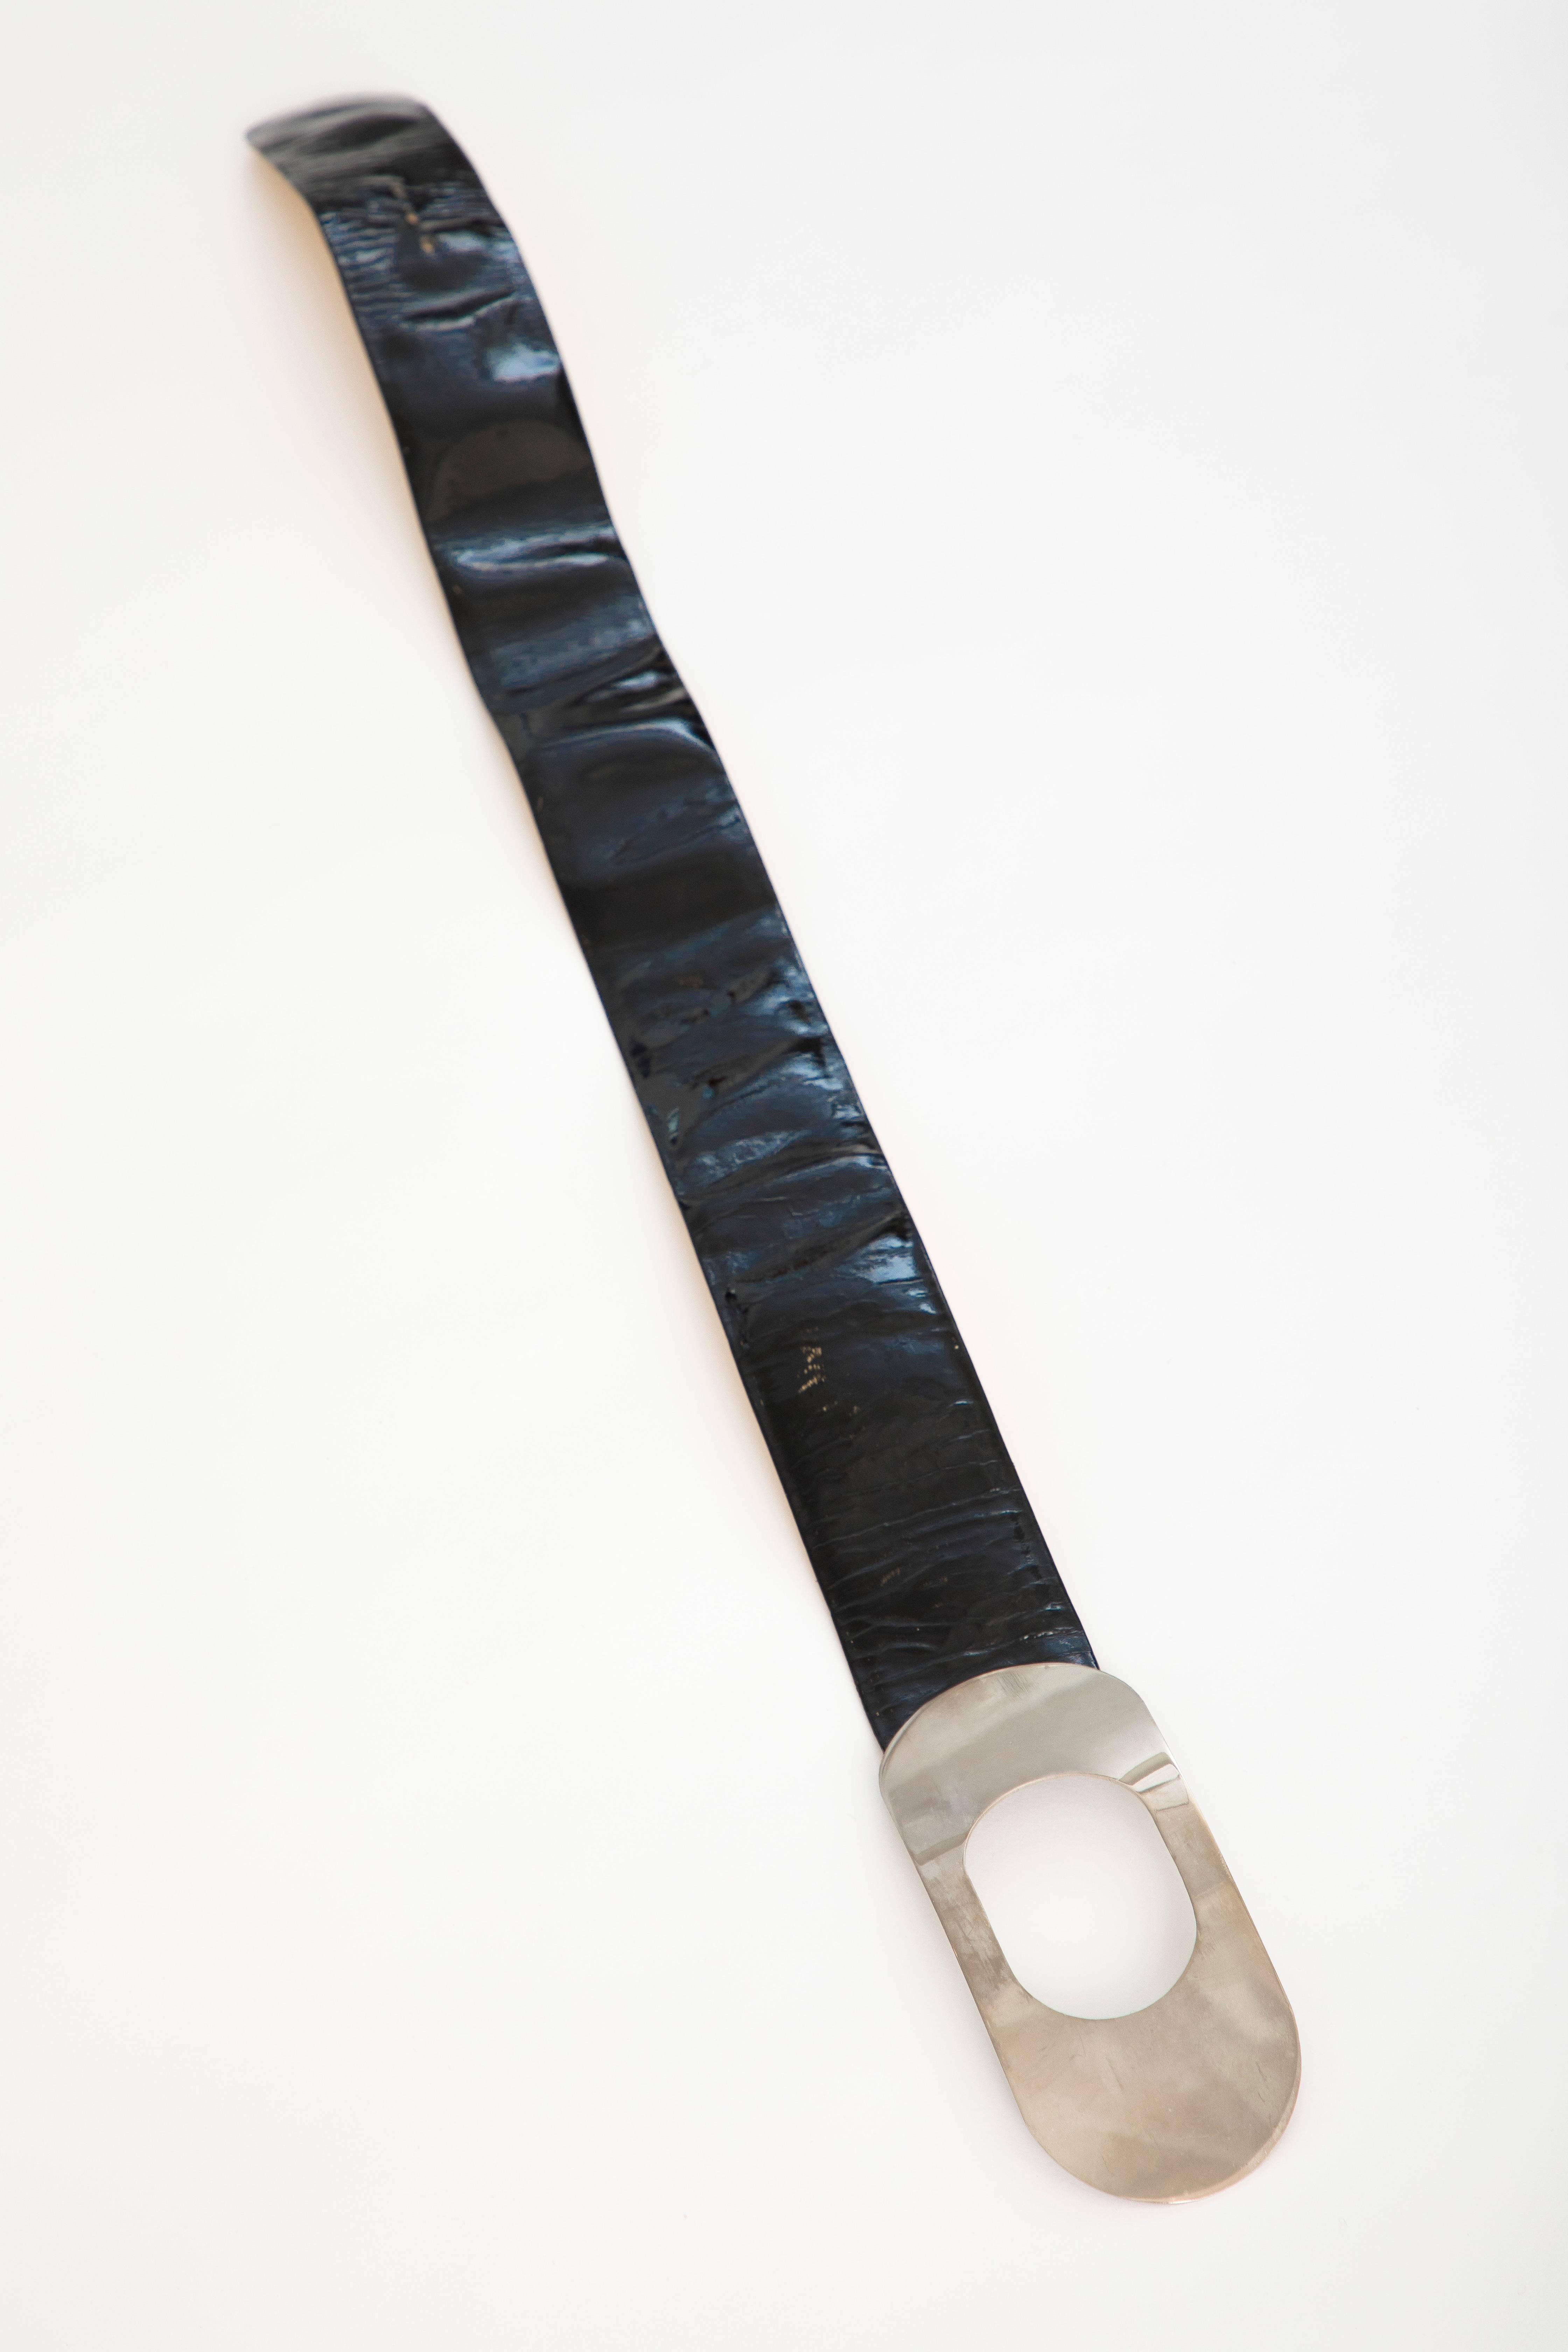 Women's Pierre Cardin Black Patent Leather Belt, Circa 1960's